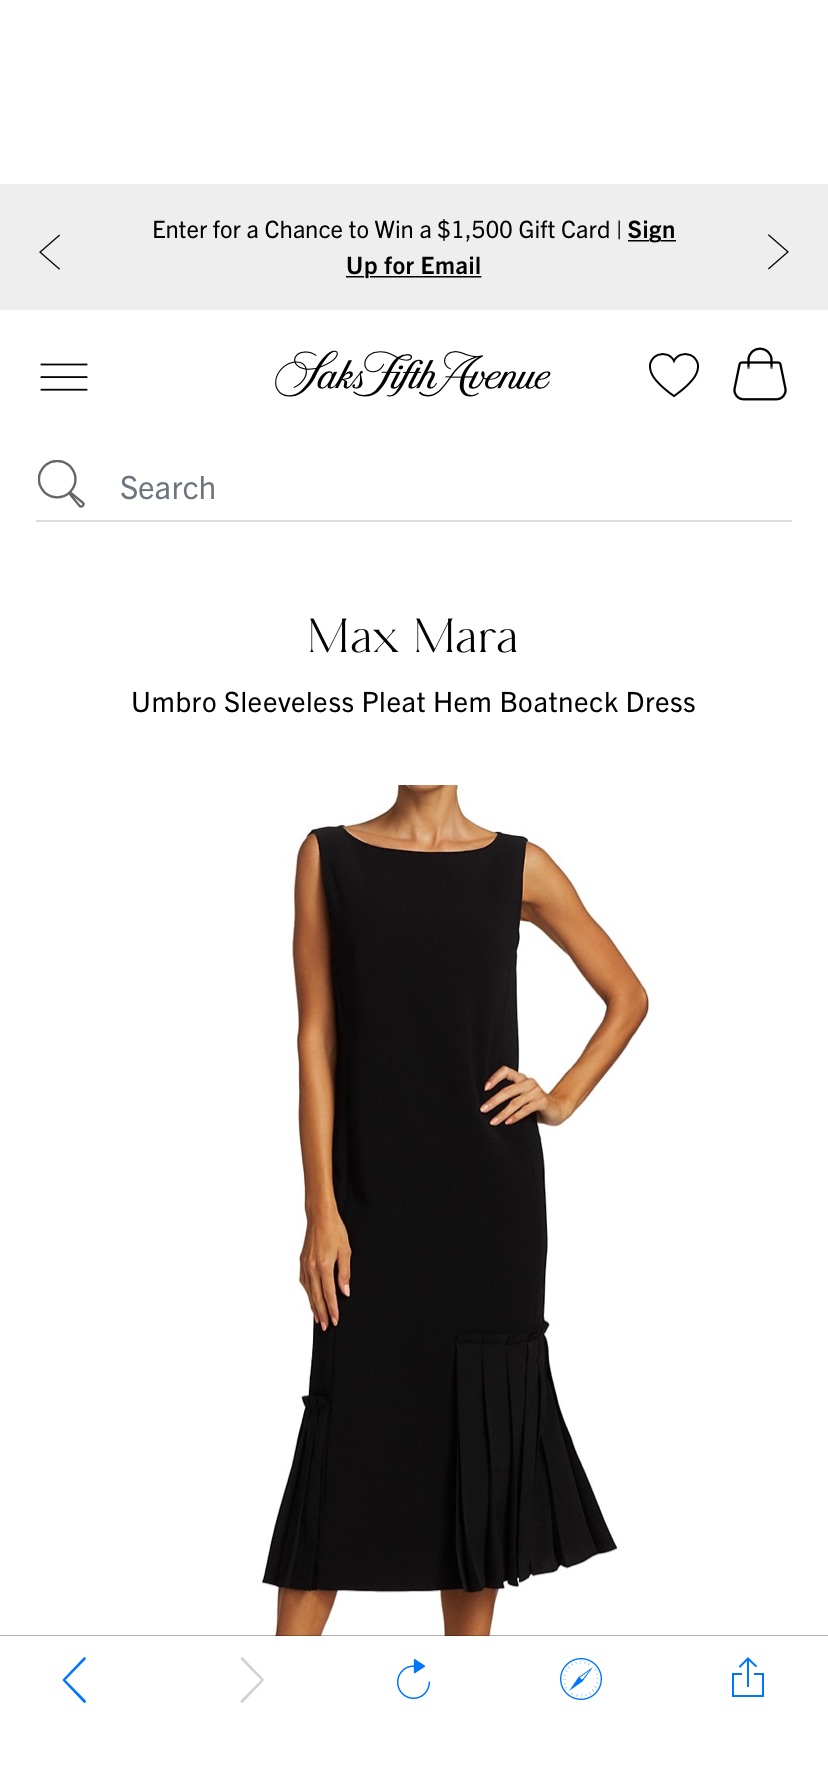 Buy Max Mara Umbro Sleeveless Pleat Hem Boatneck Dress up to 70% Off | Saks Fifth Avenue 裙子